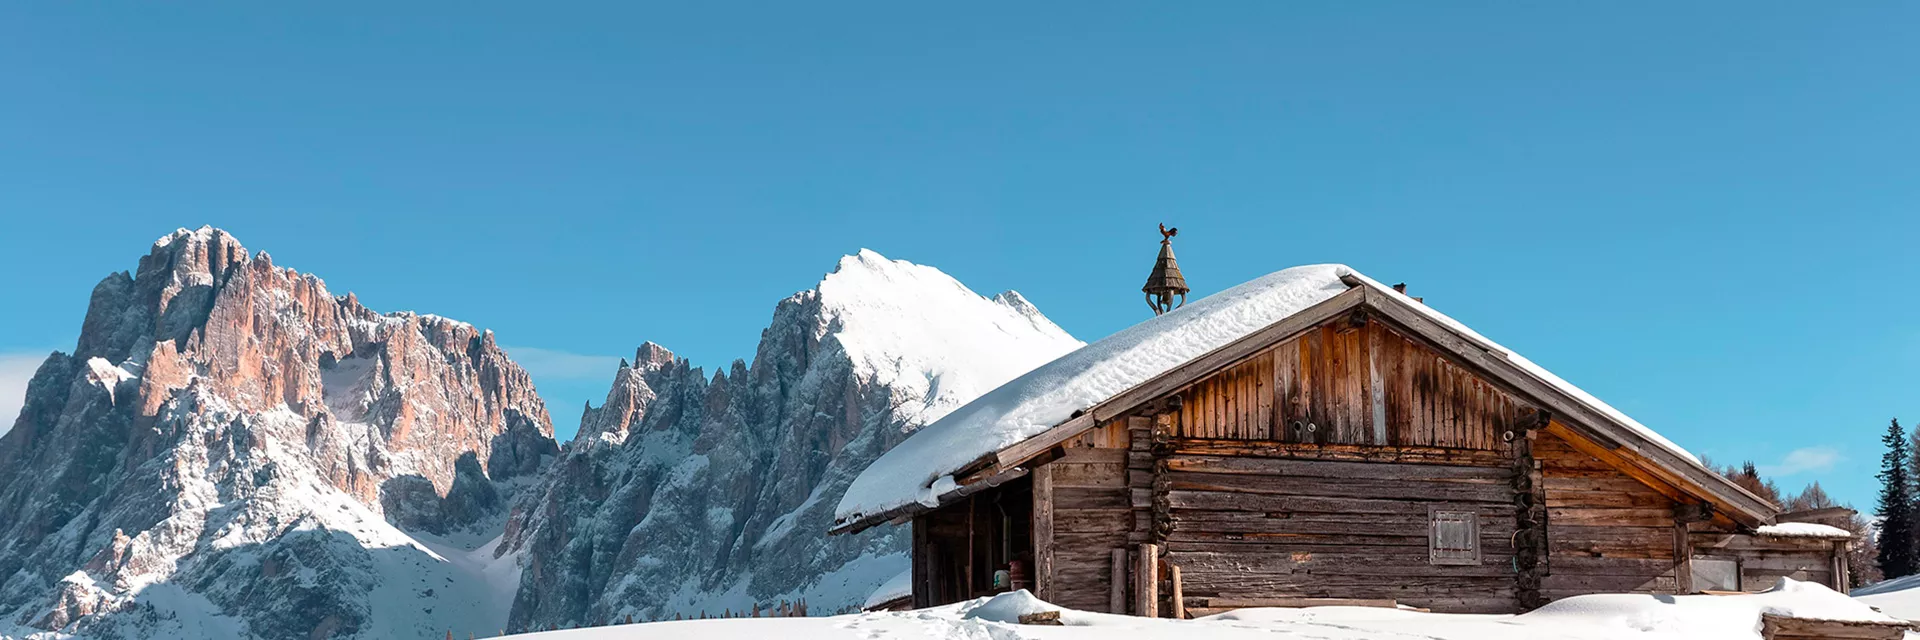 Holiday rental Rhone-Alpes winter